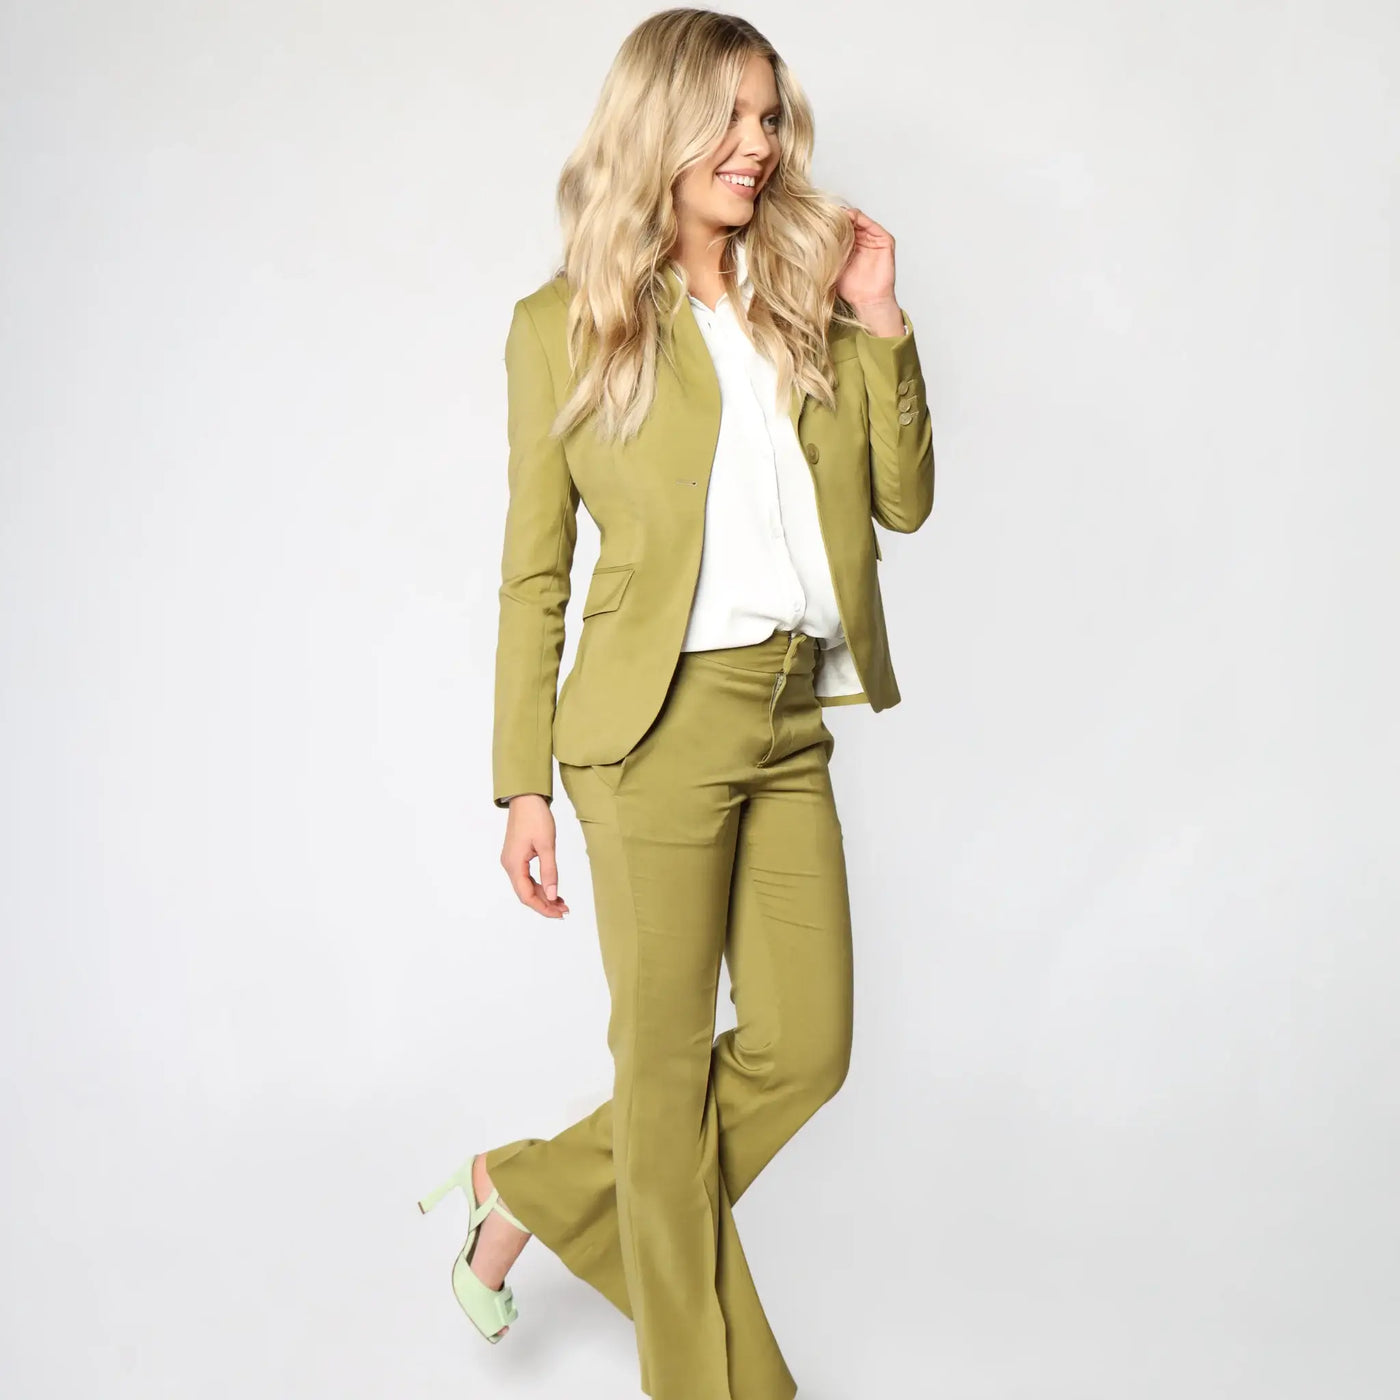 Lodevole Womens Living for Luxe Green Blazer Side View Walking Stance